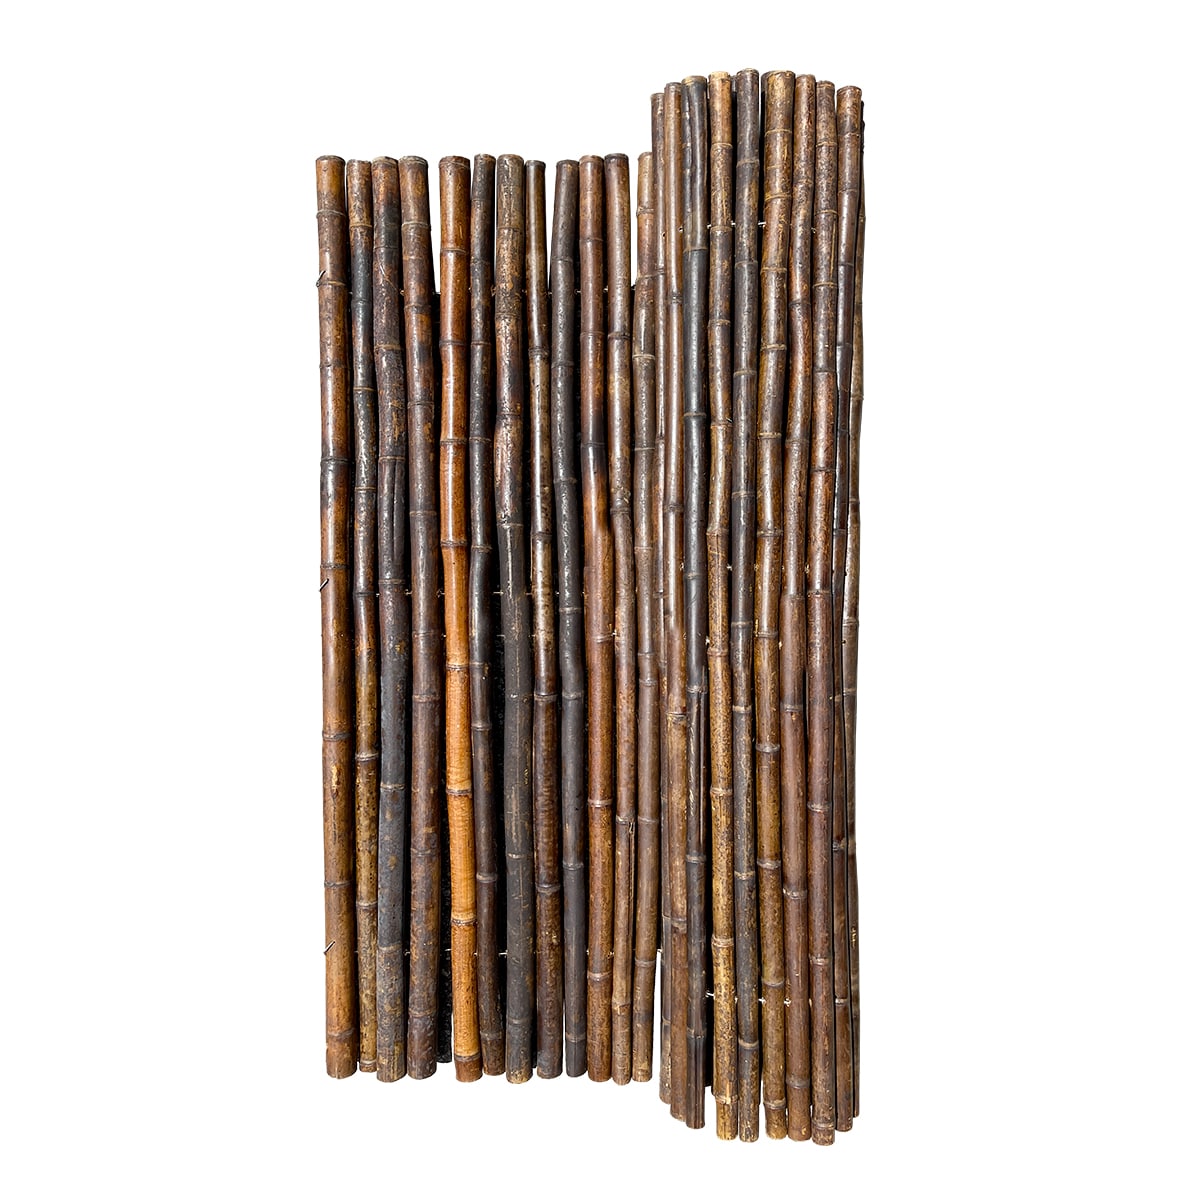 Bamboo Stalks — CaljavaOnline